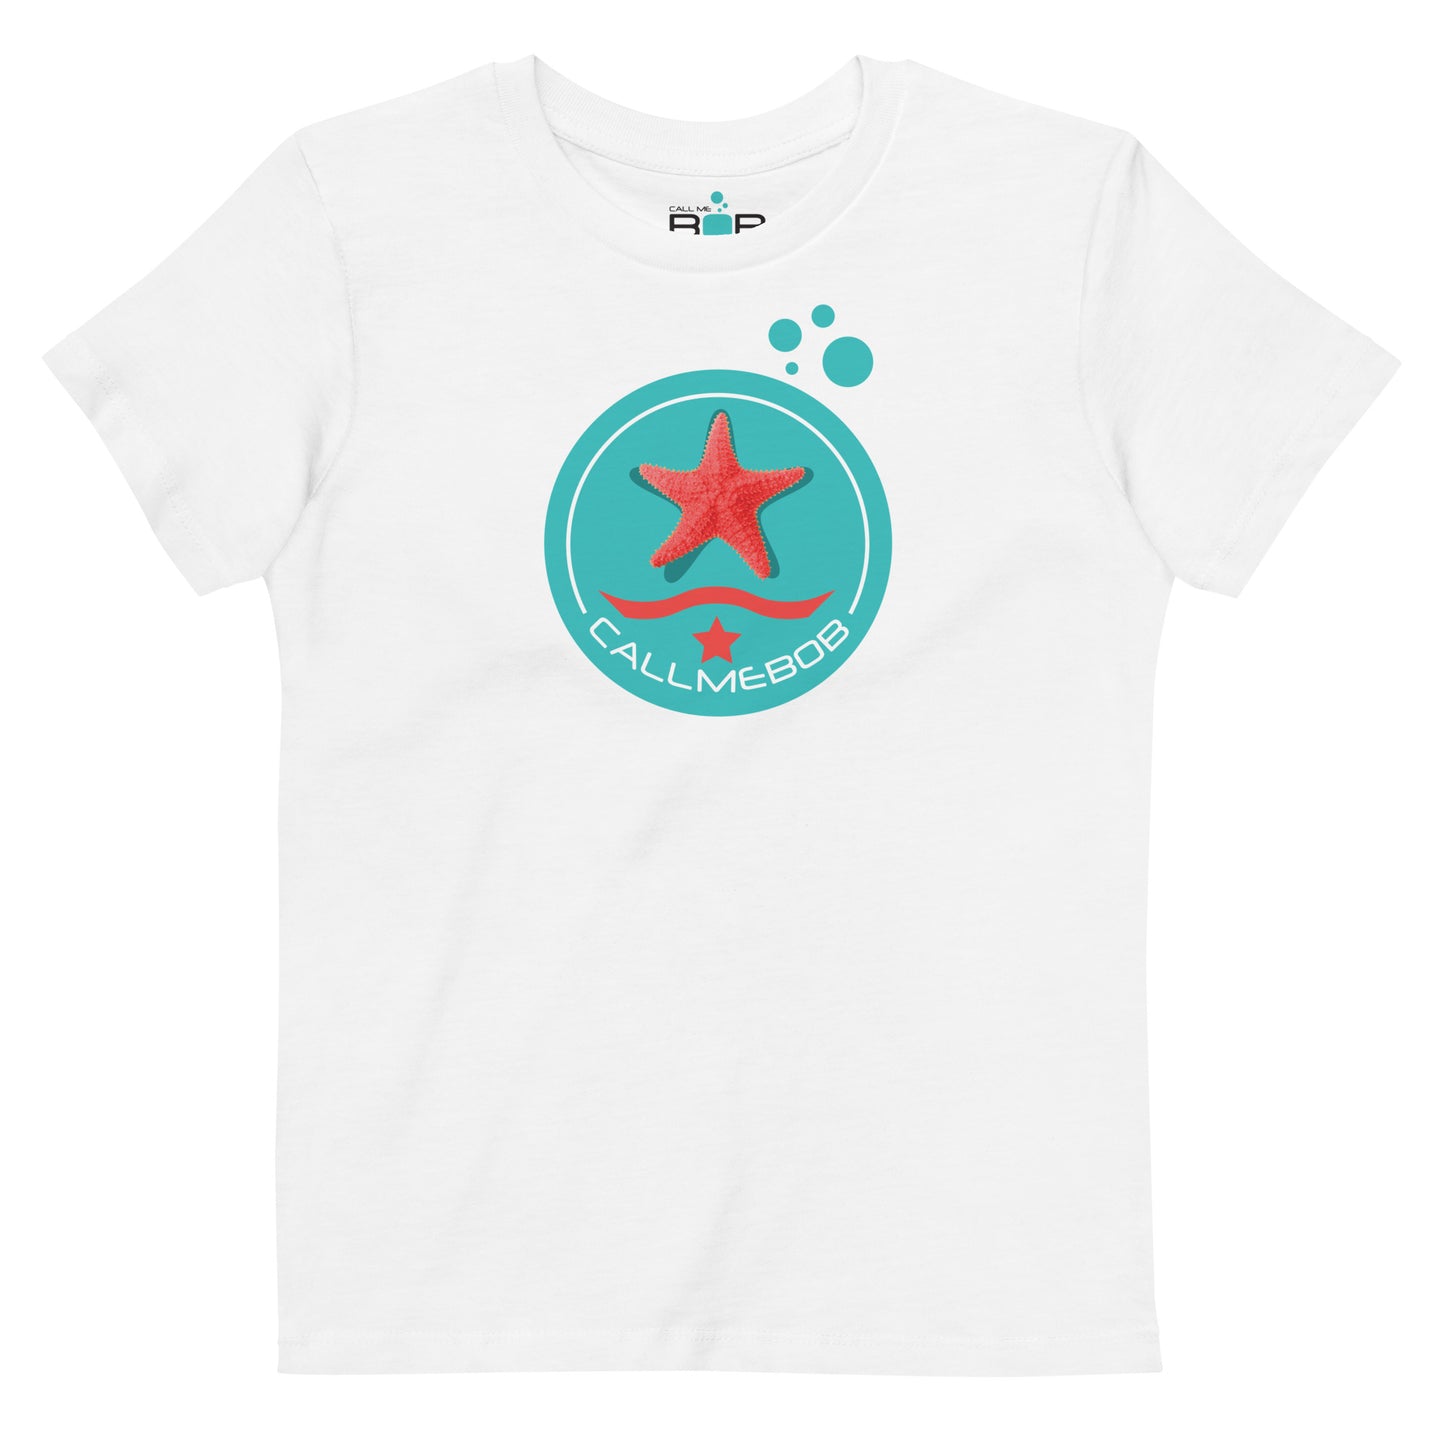 One Star, boy's organic cotton t-shirt